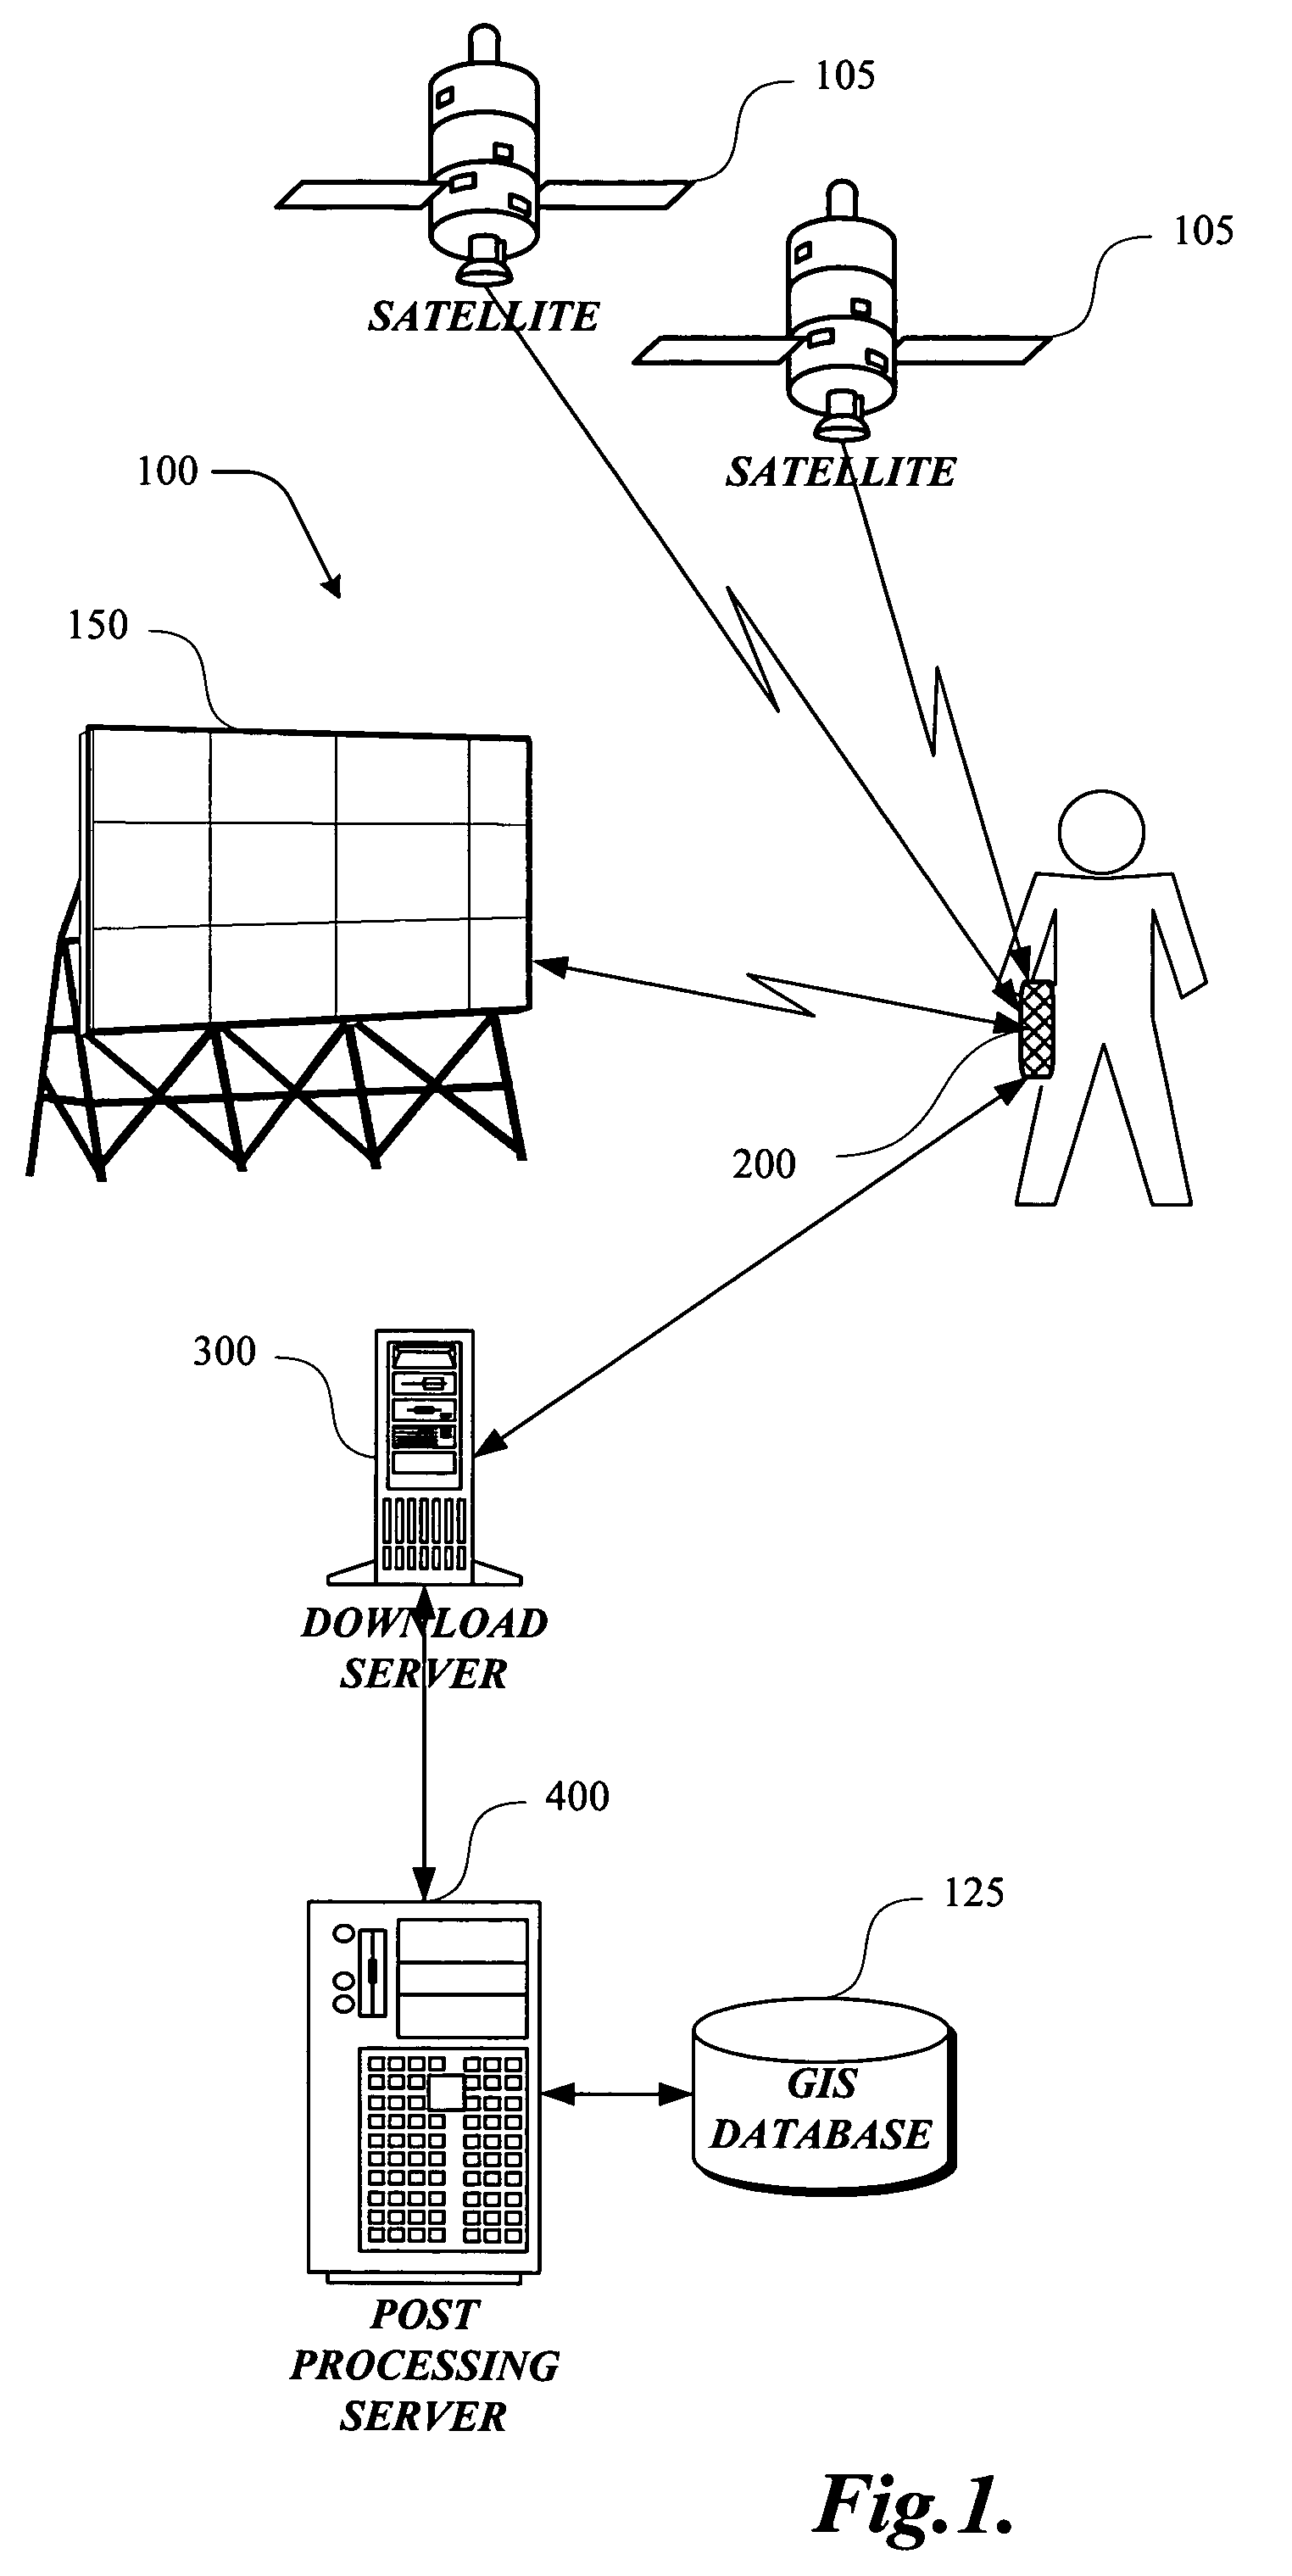 Satellite positioning system enabled media measurement system and method